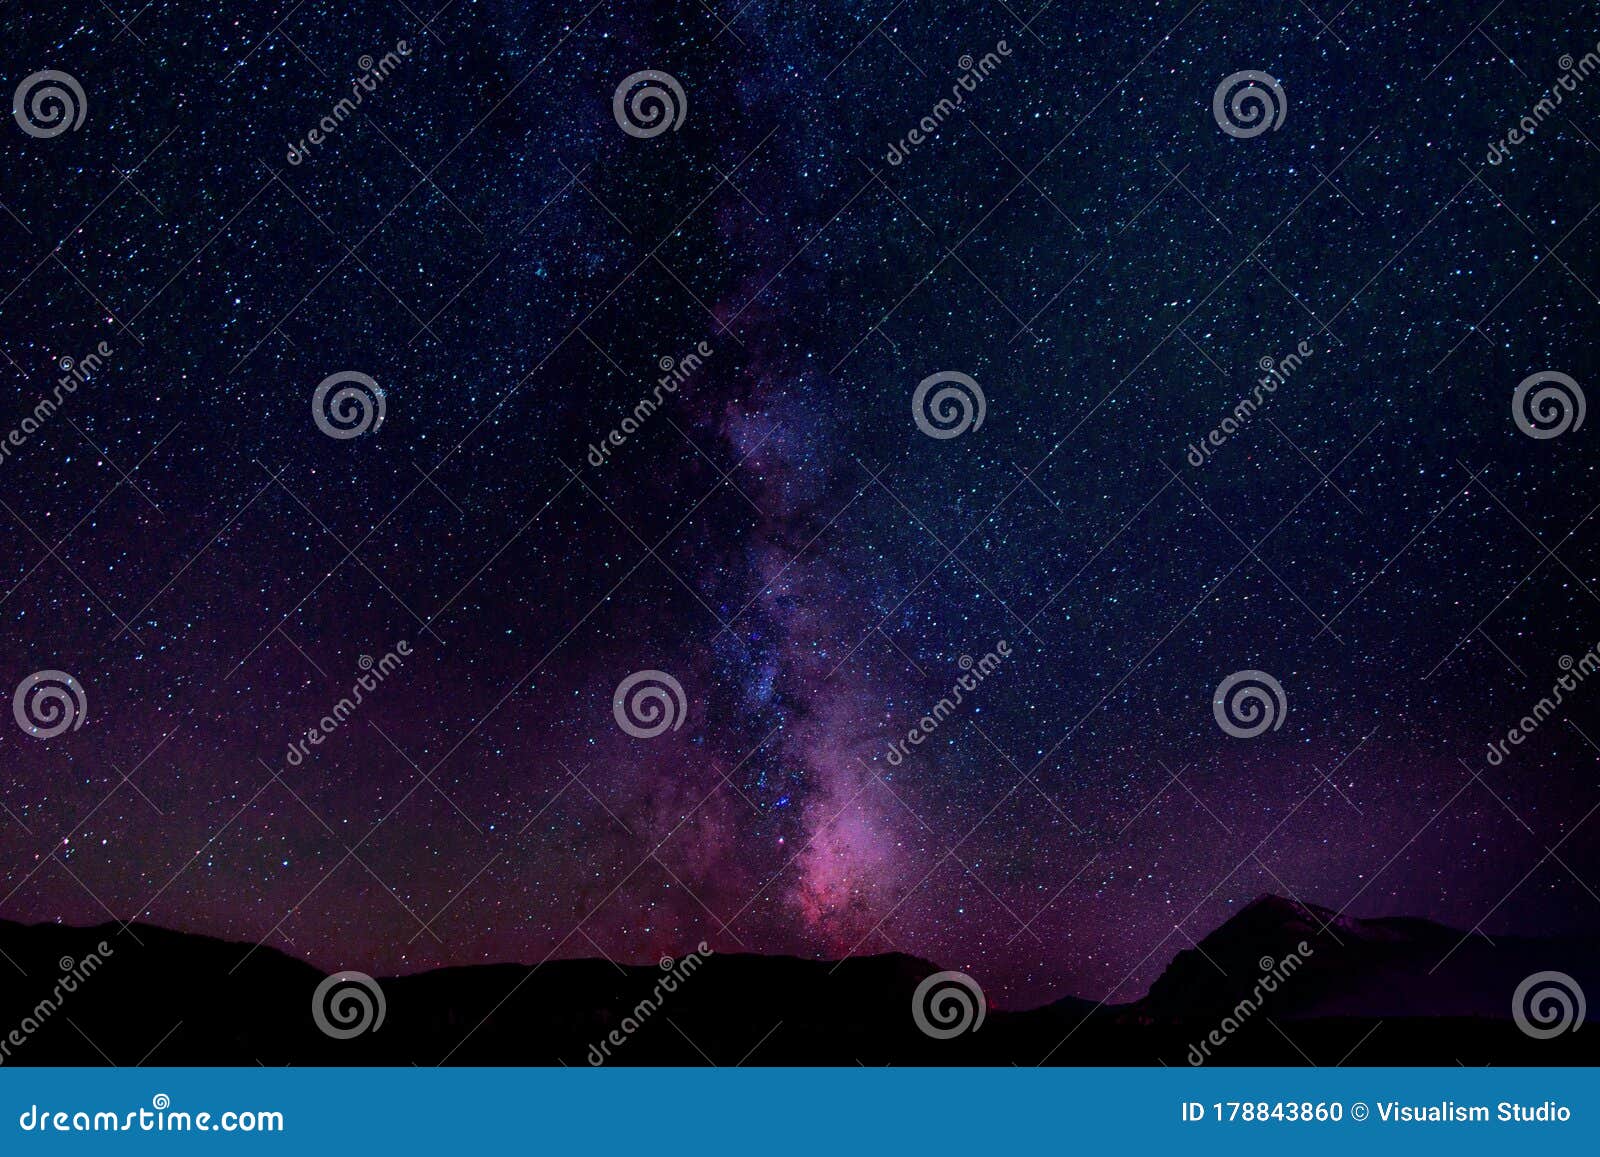 Dark Blue And Purple Space Sky Galaxy And Stars Beautiful Universe